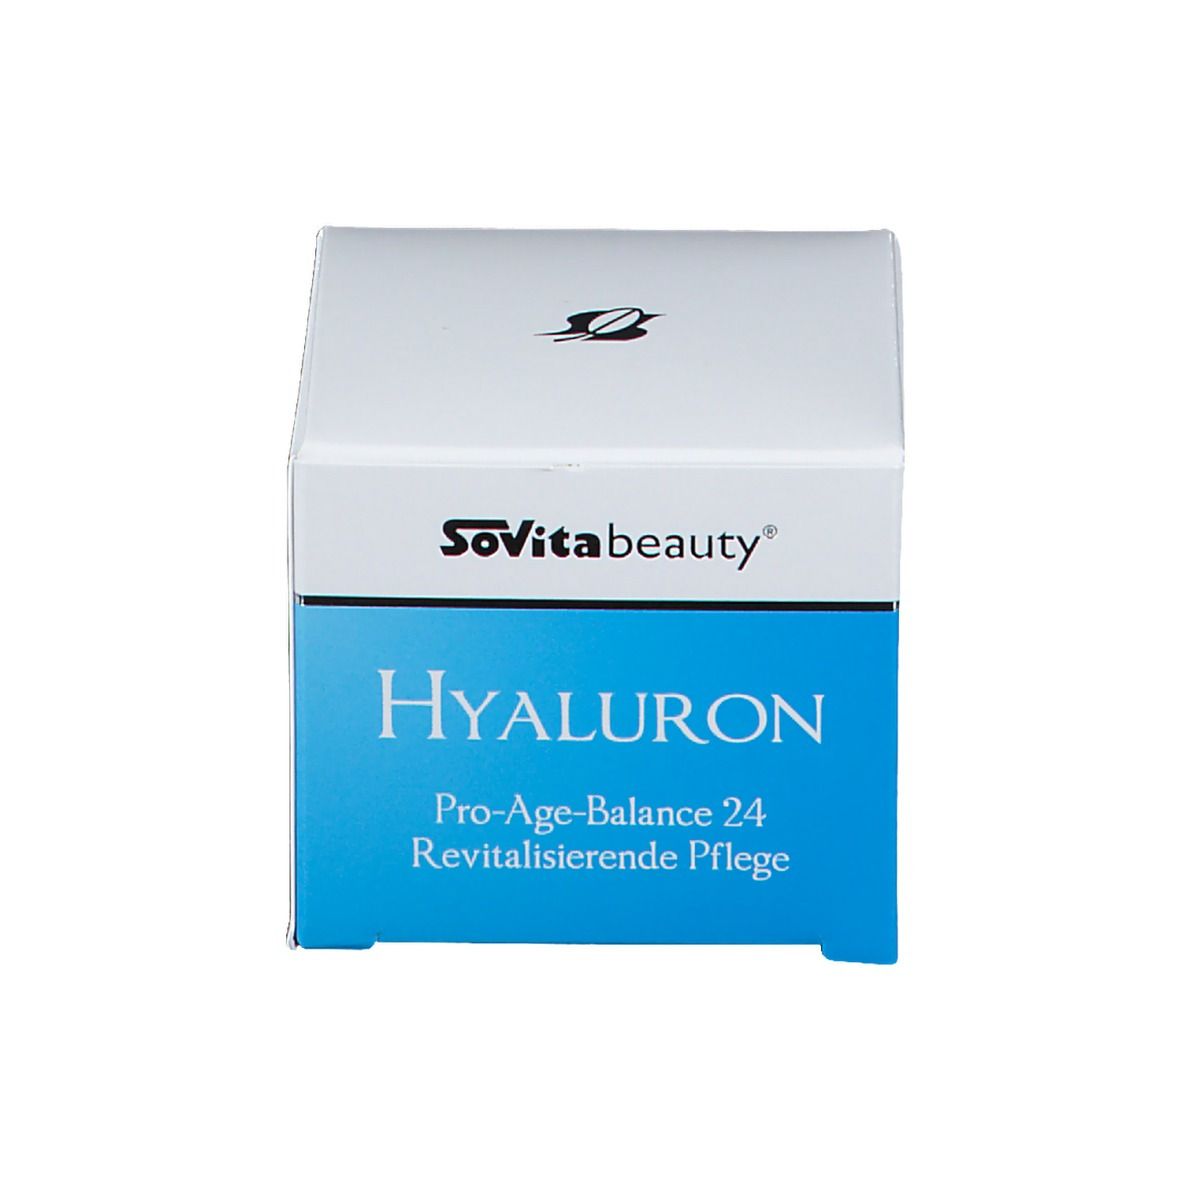 SoVitabeauty® Hyaluron Pro-Age-Balance 24